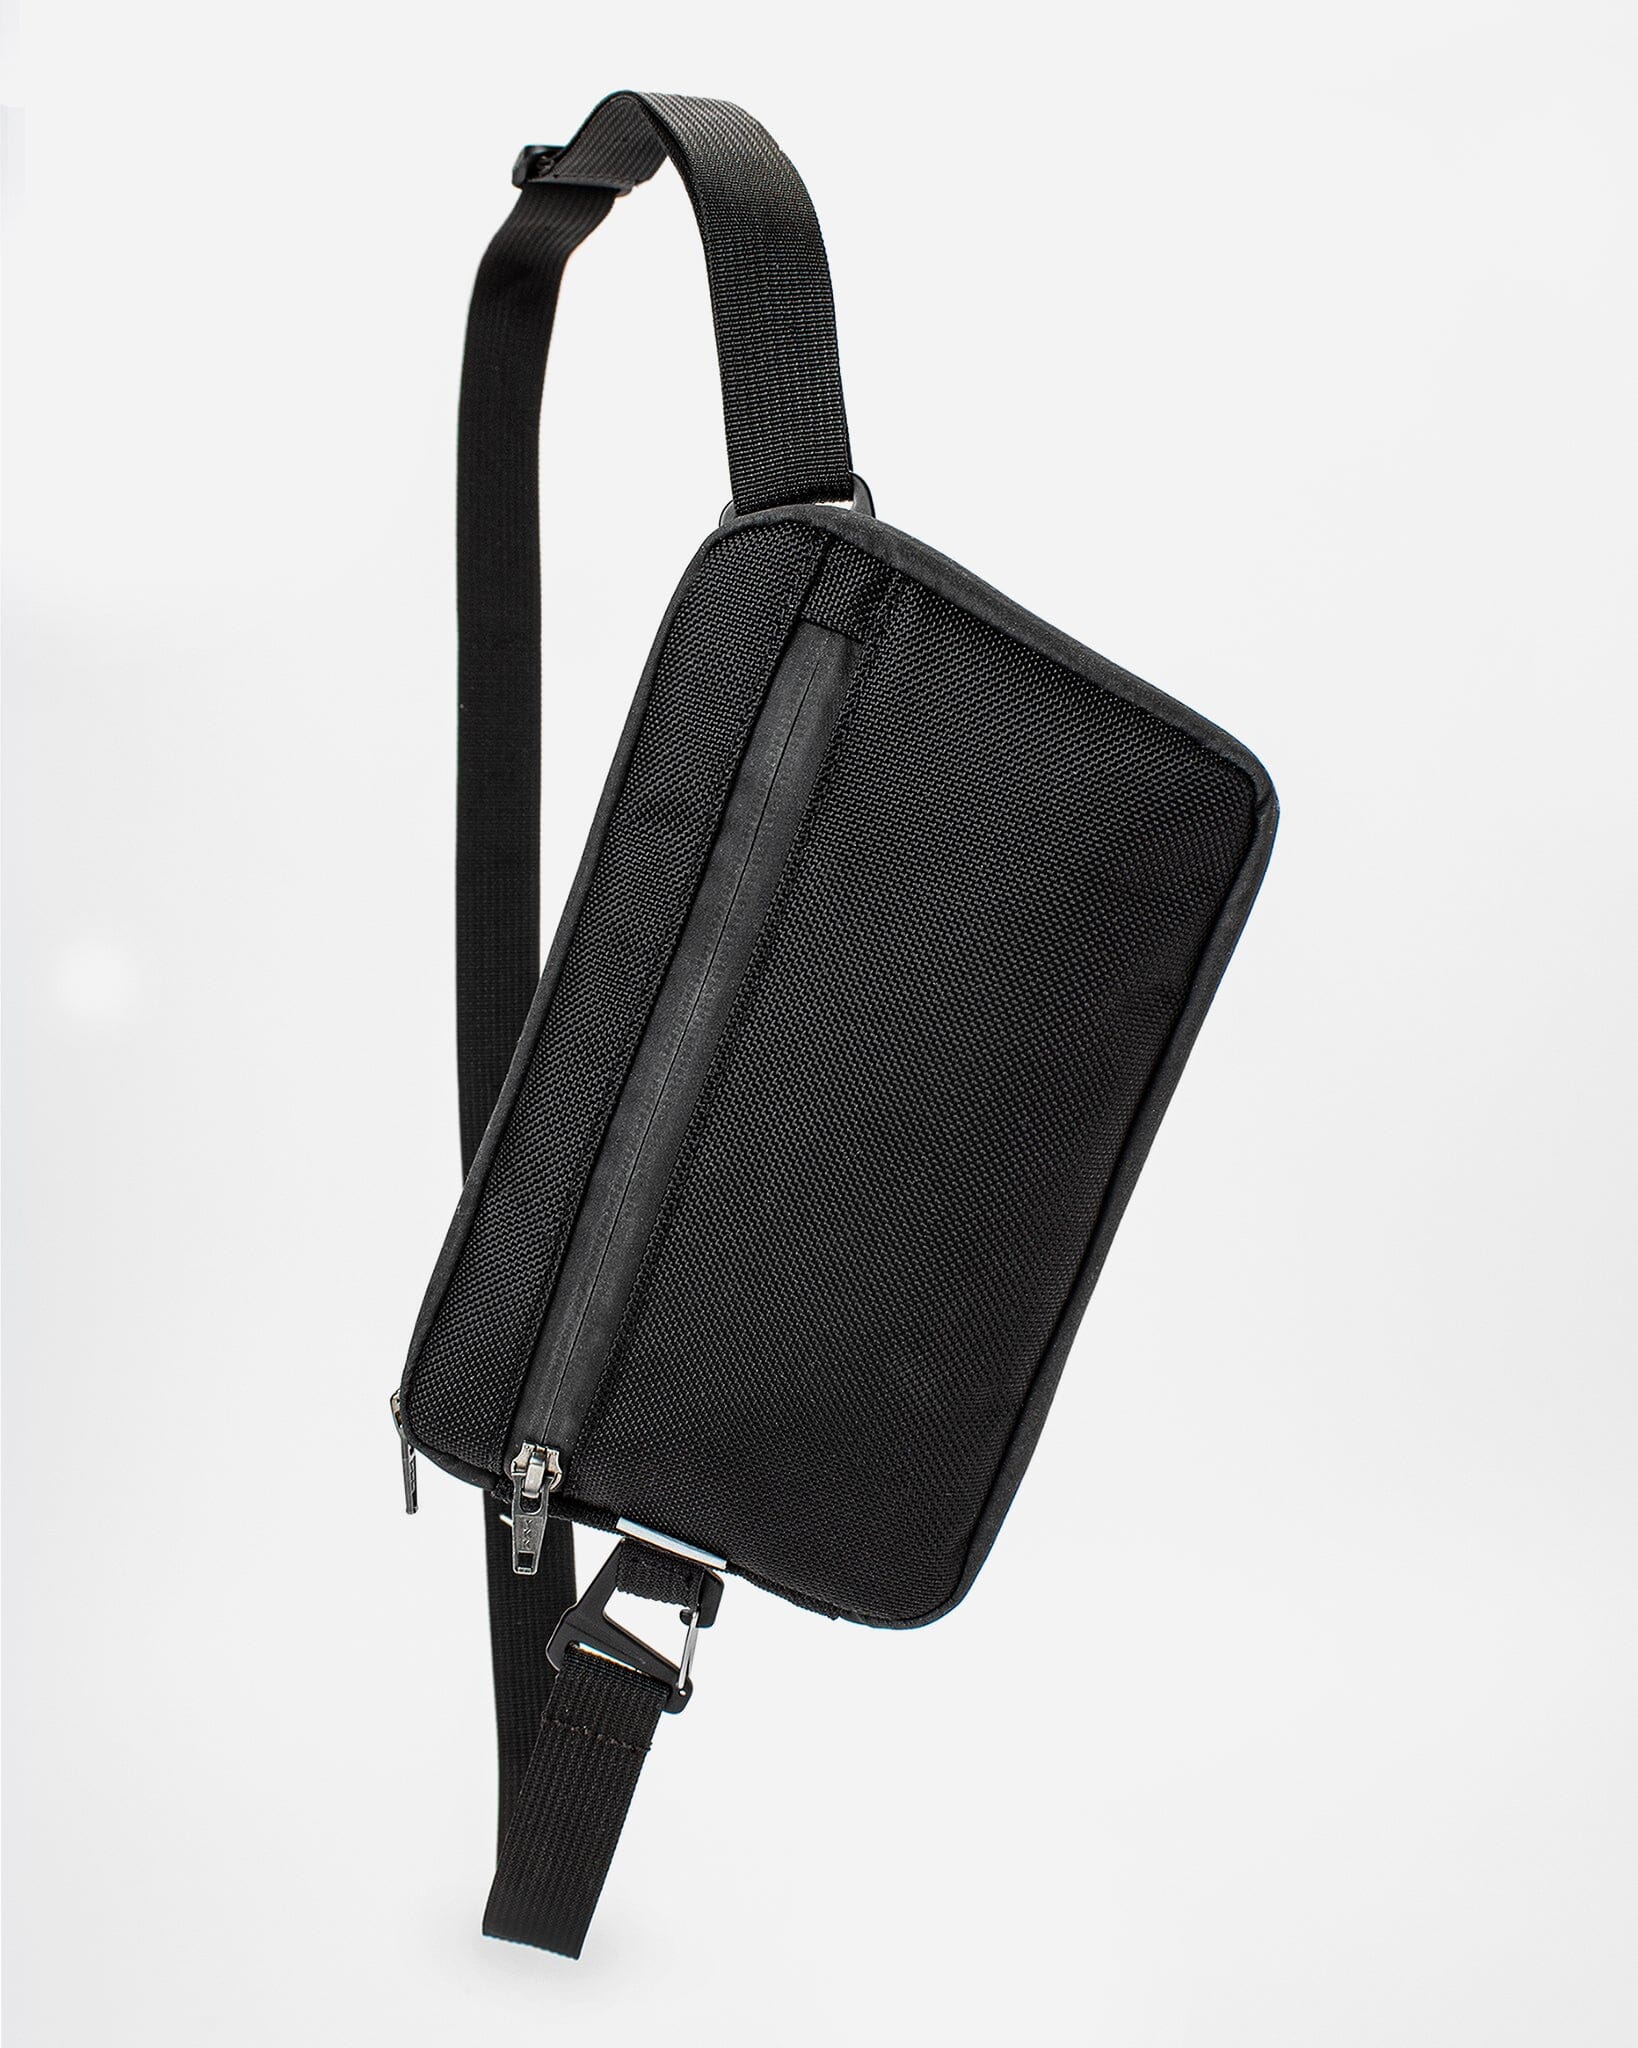 AUX™ Sling - Stealth Ballistic Bag bolstr Black  